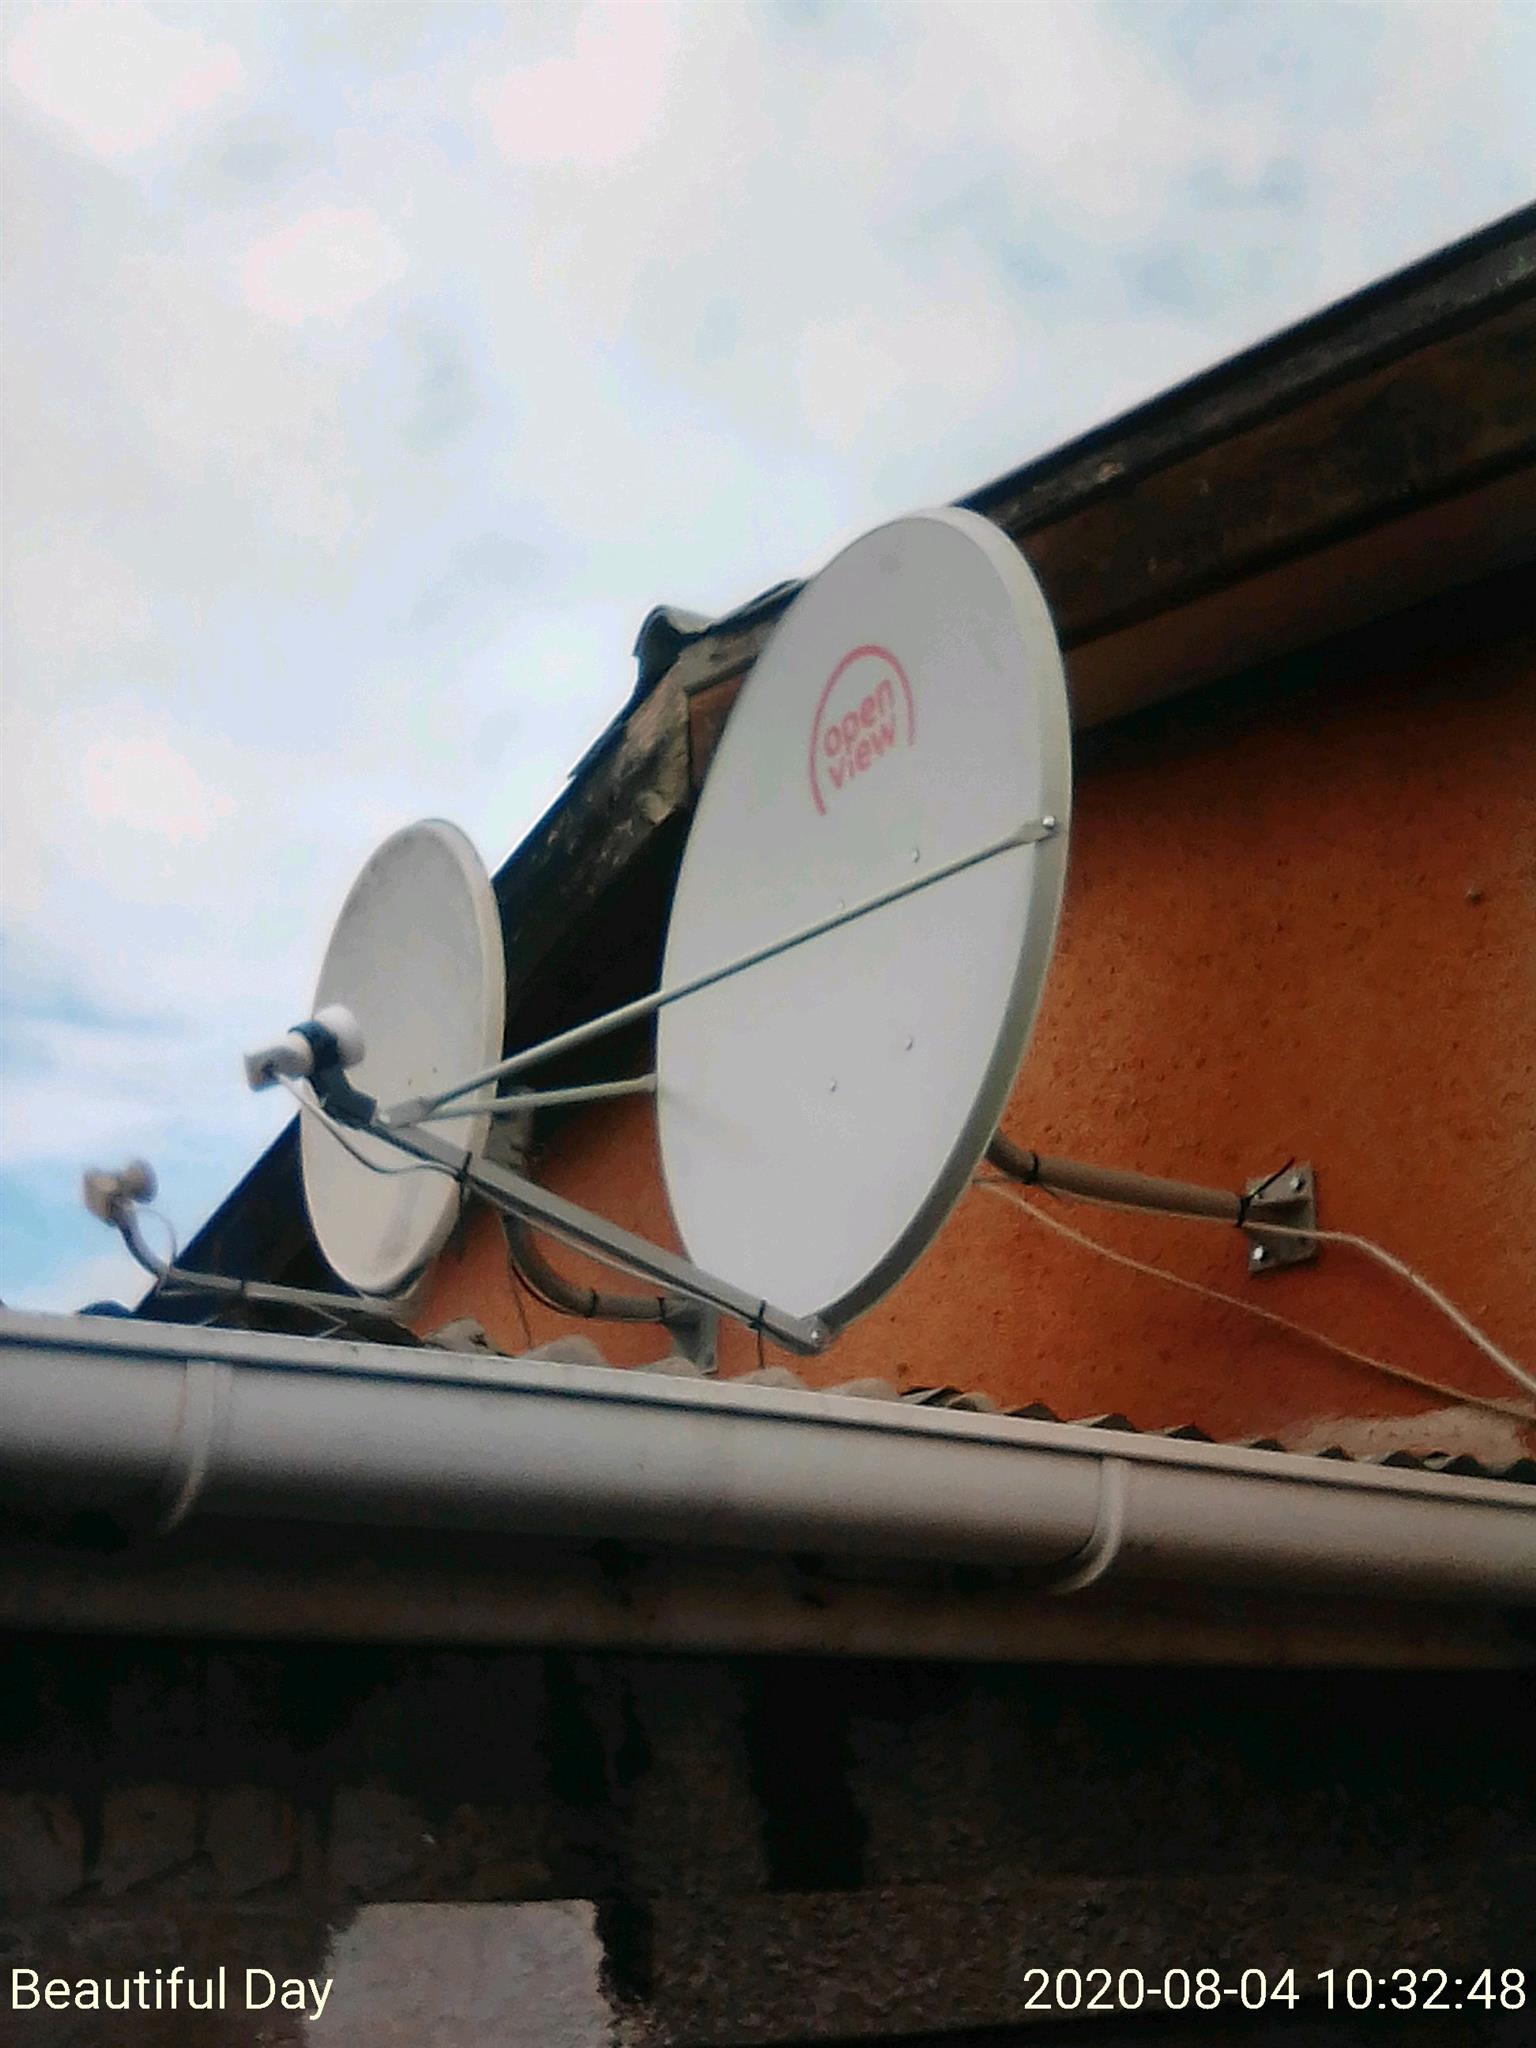 Satellite Dish Installers